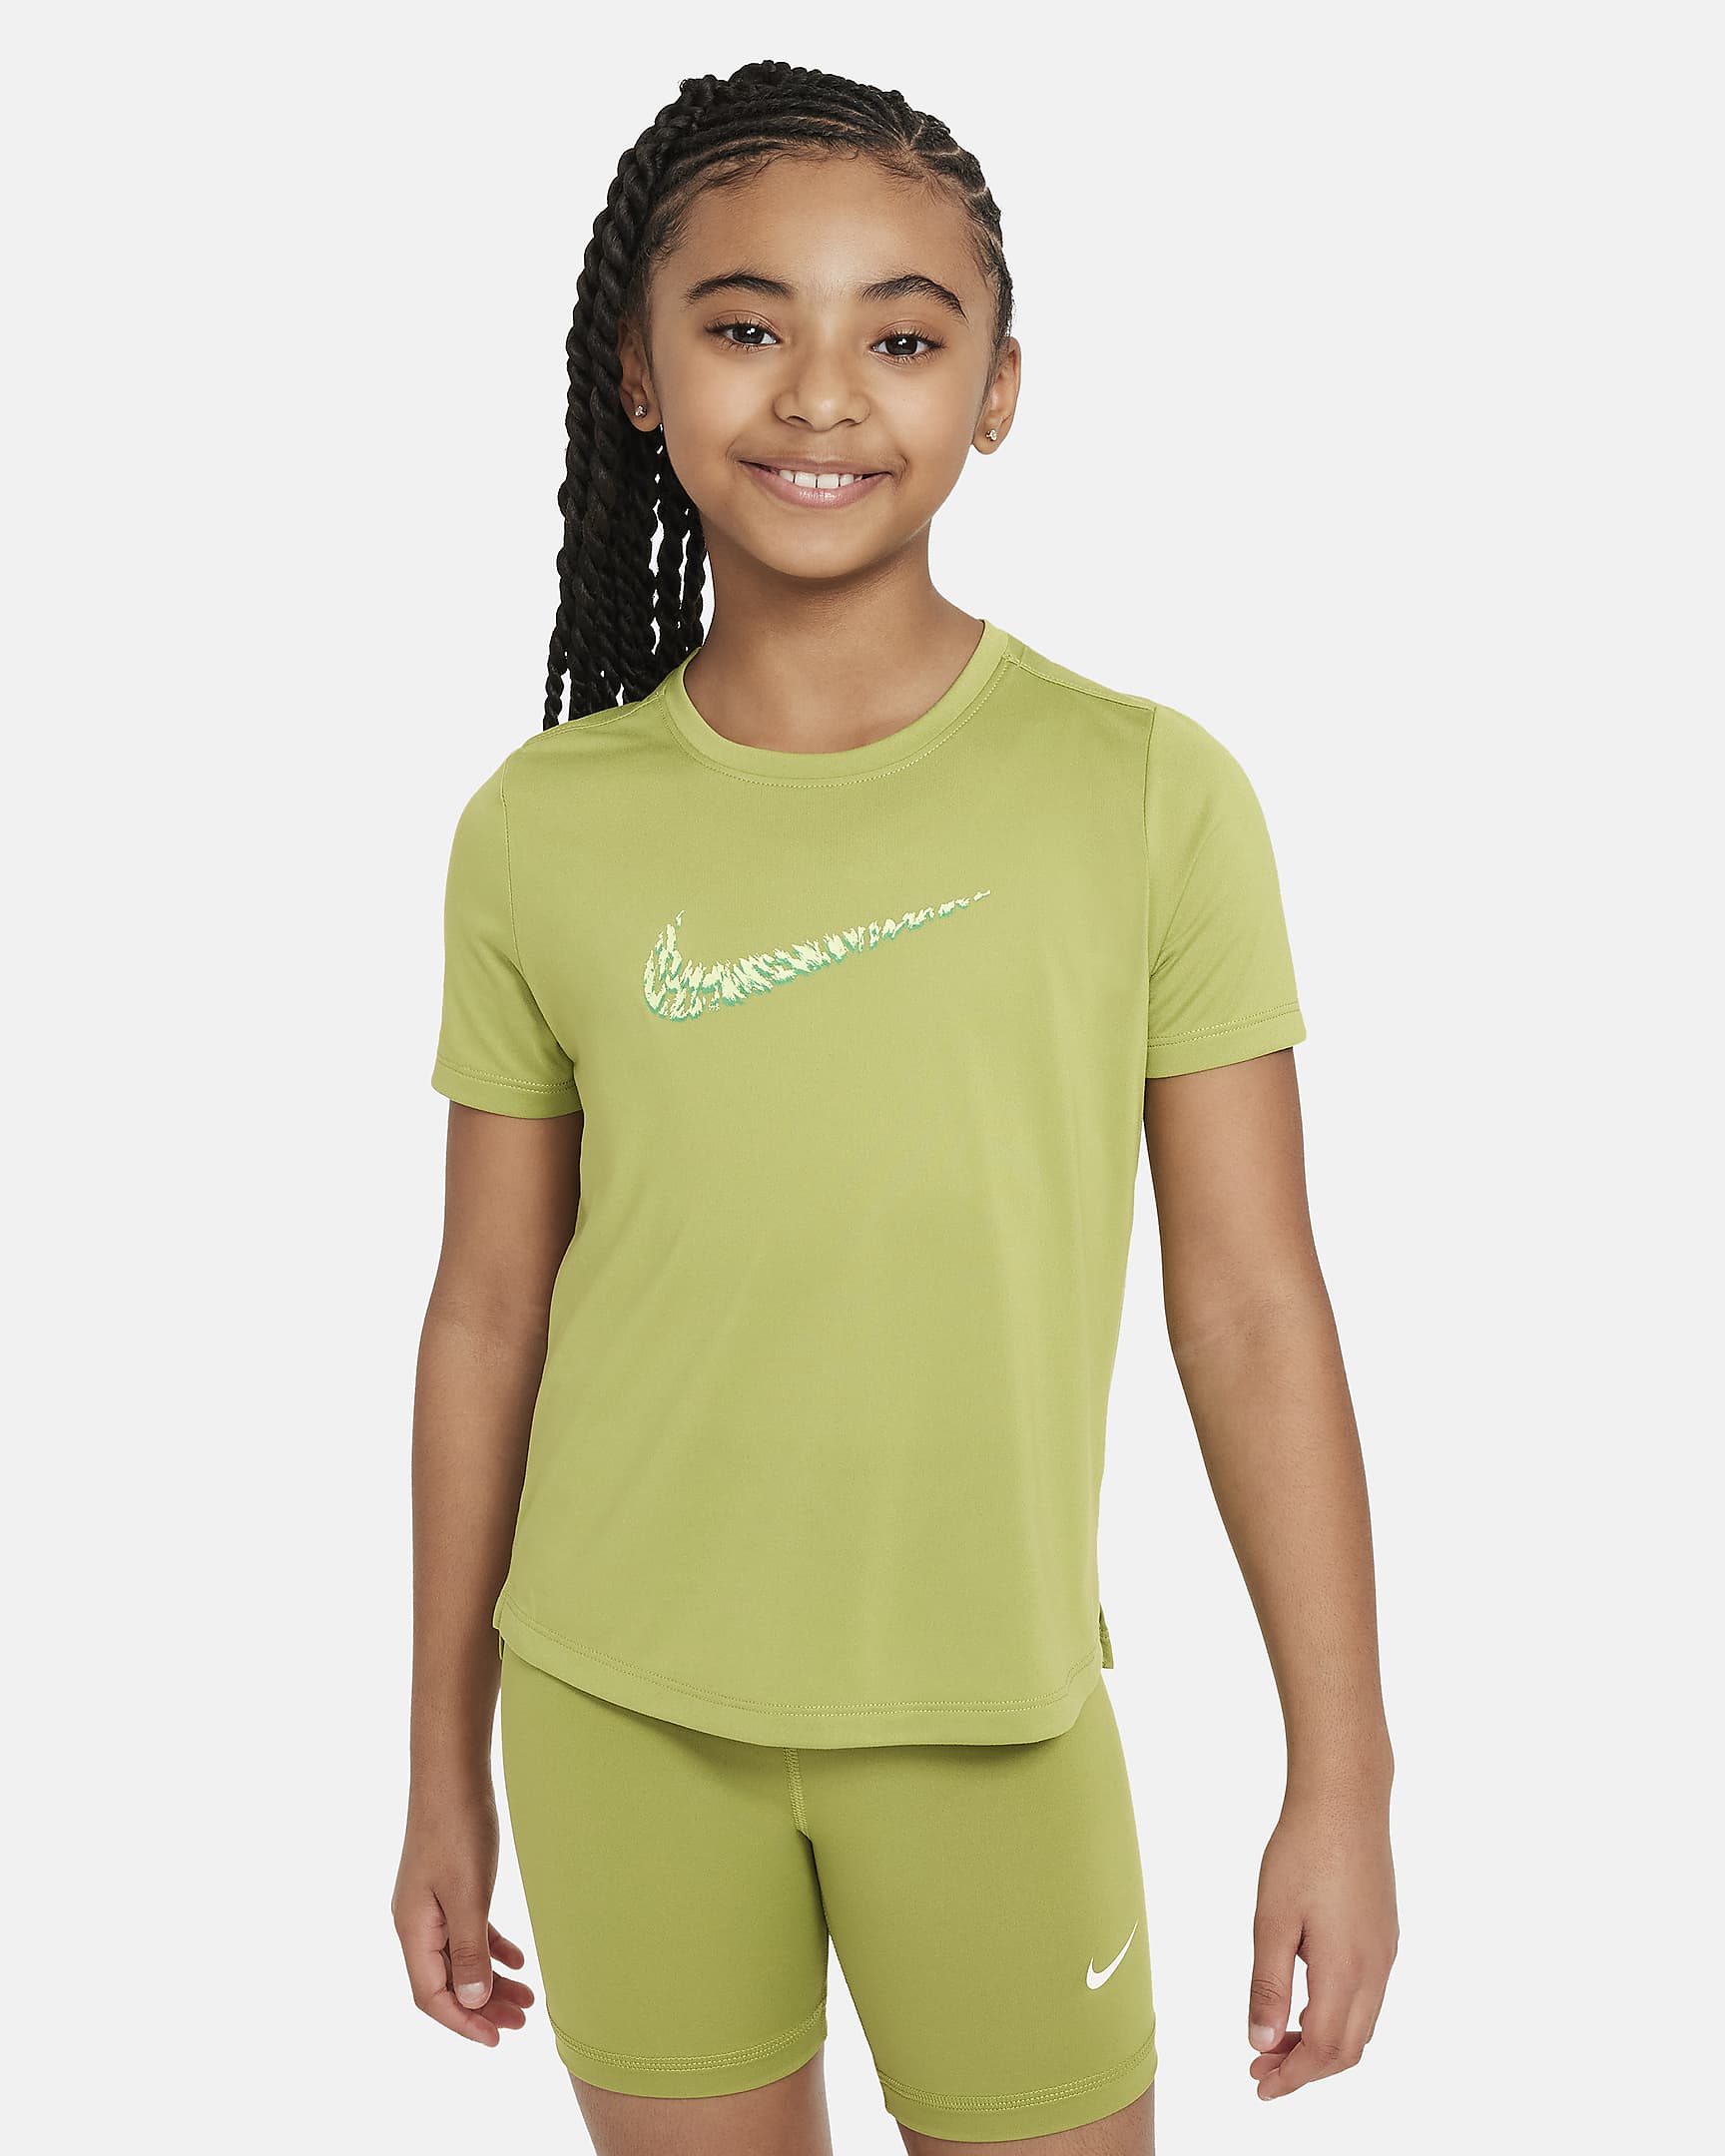 Nike One Big Kids' (Girls') Short-Sleeve Training Top. Nike.com